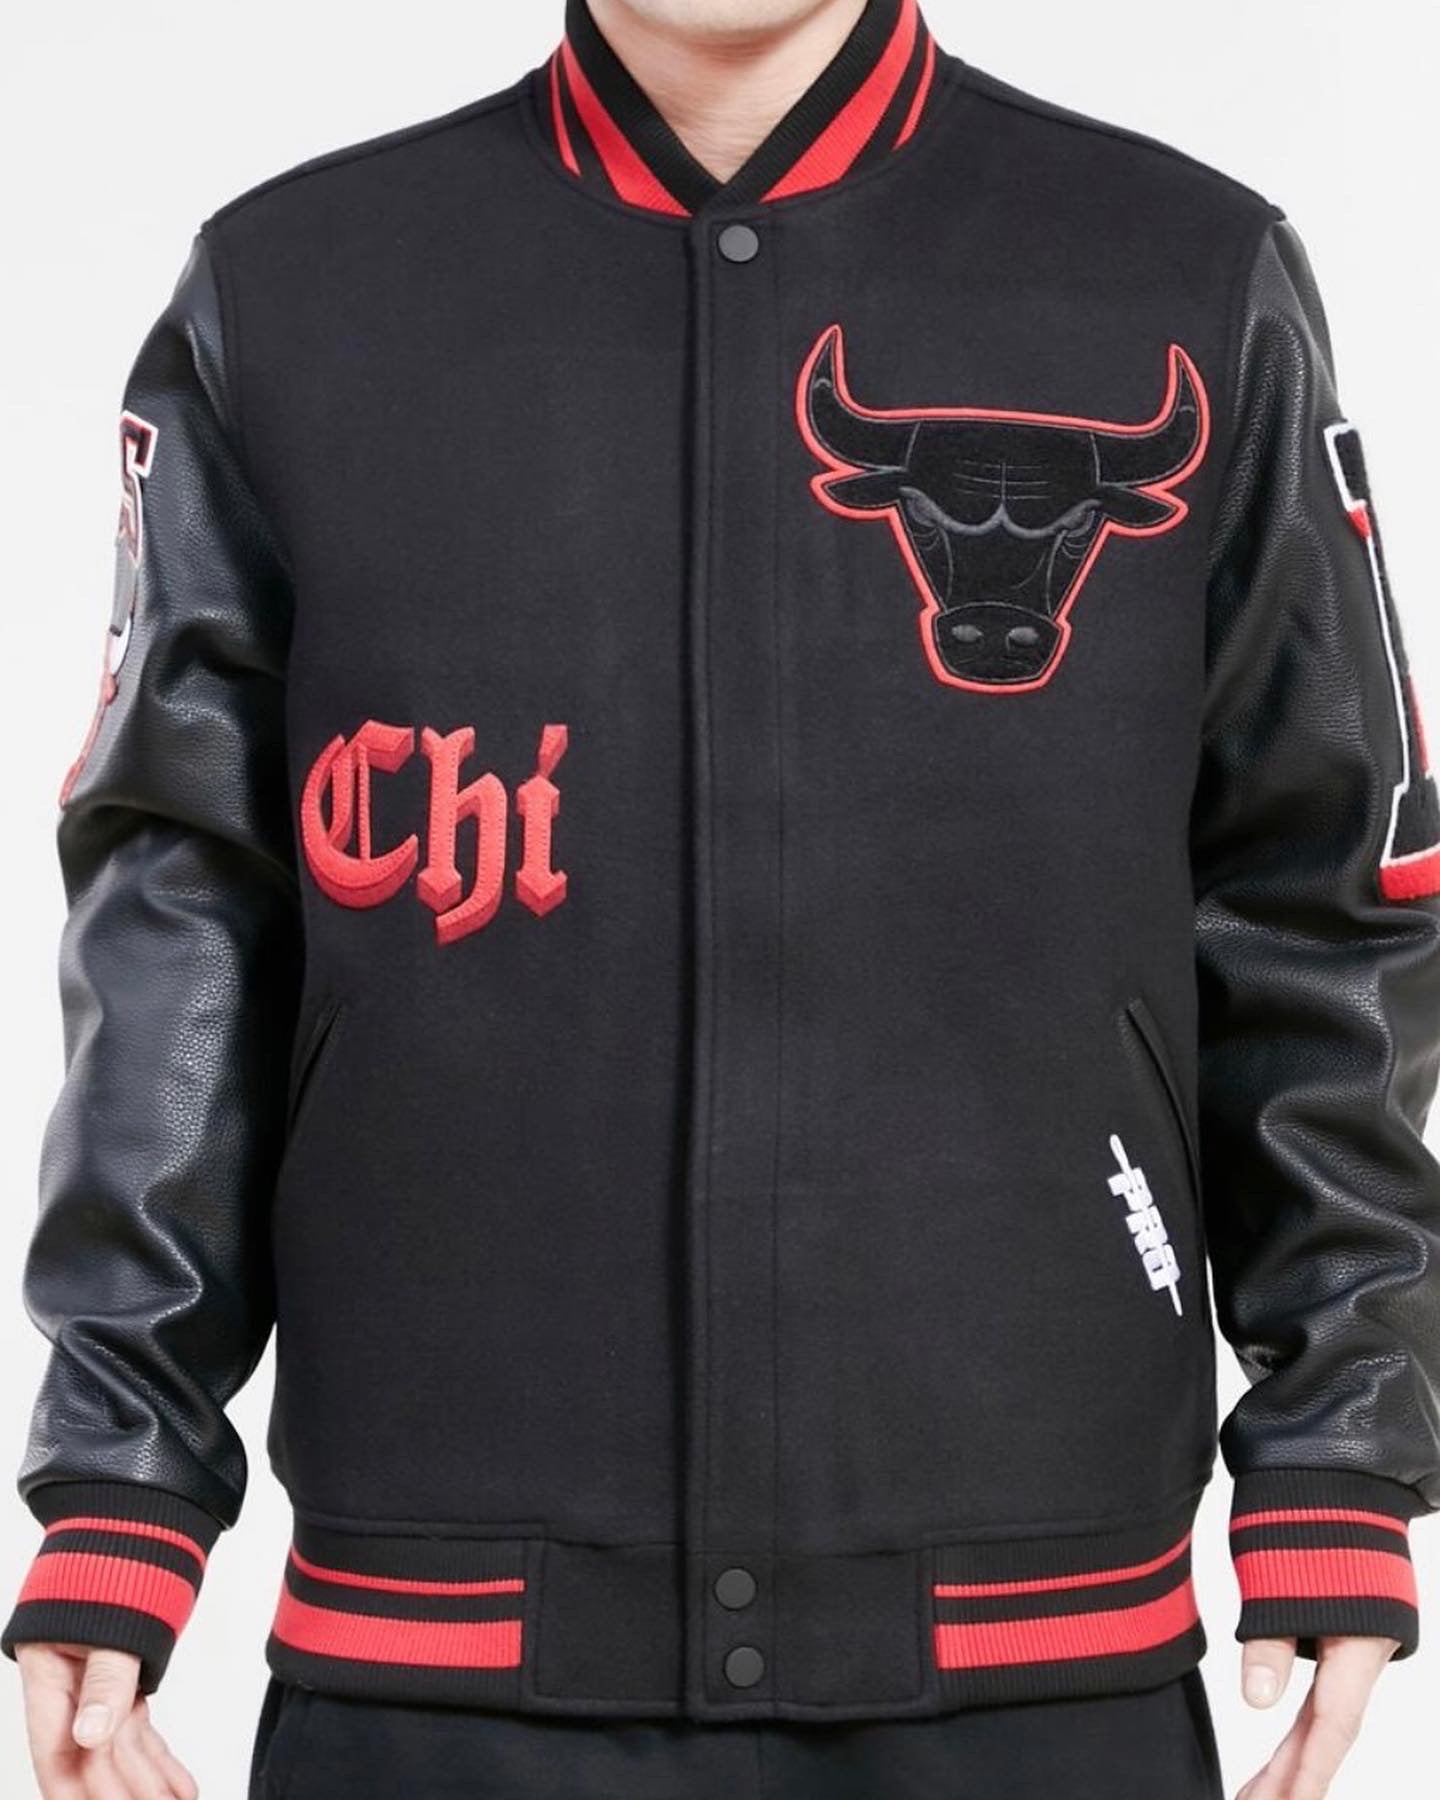 Black and Grey Varsity Chicago Bulls Jacket - HJacket